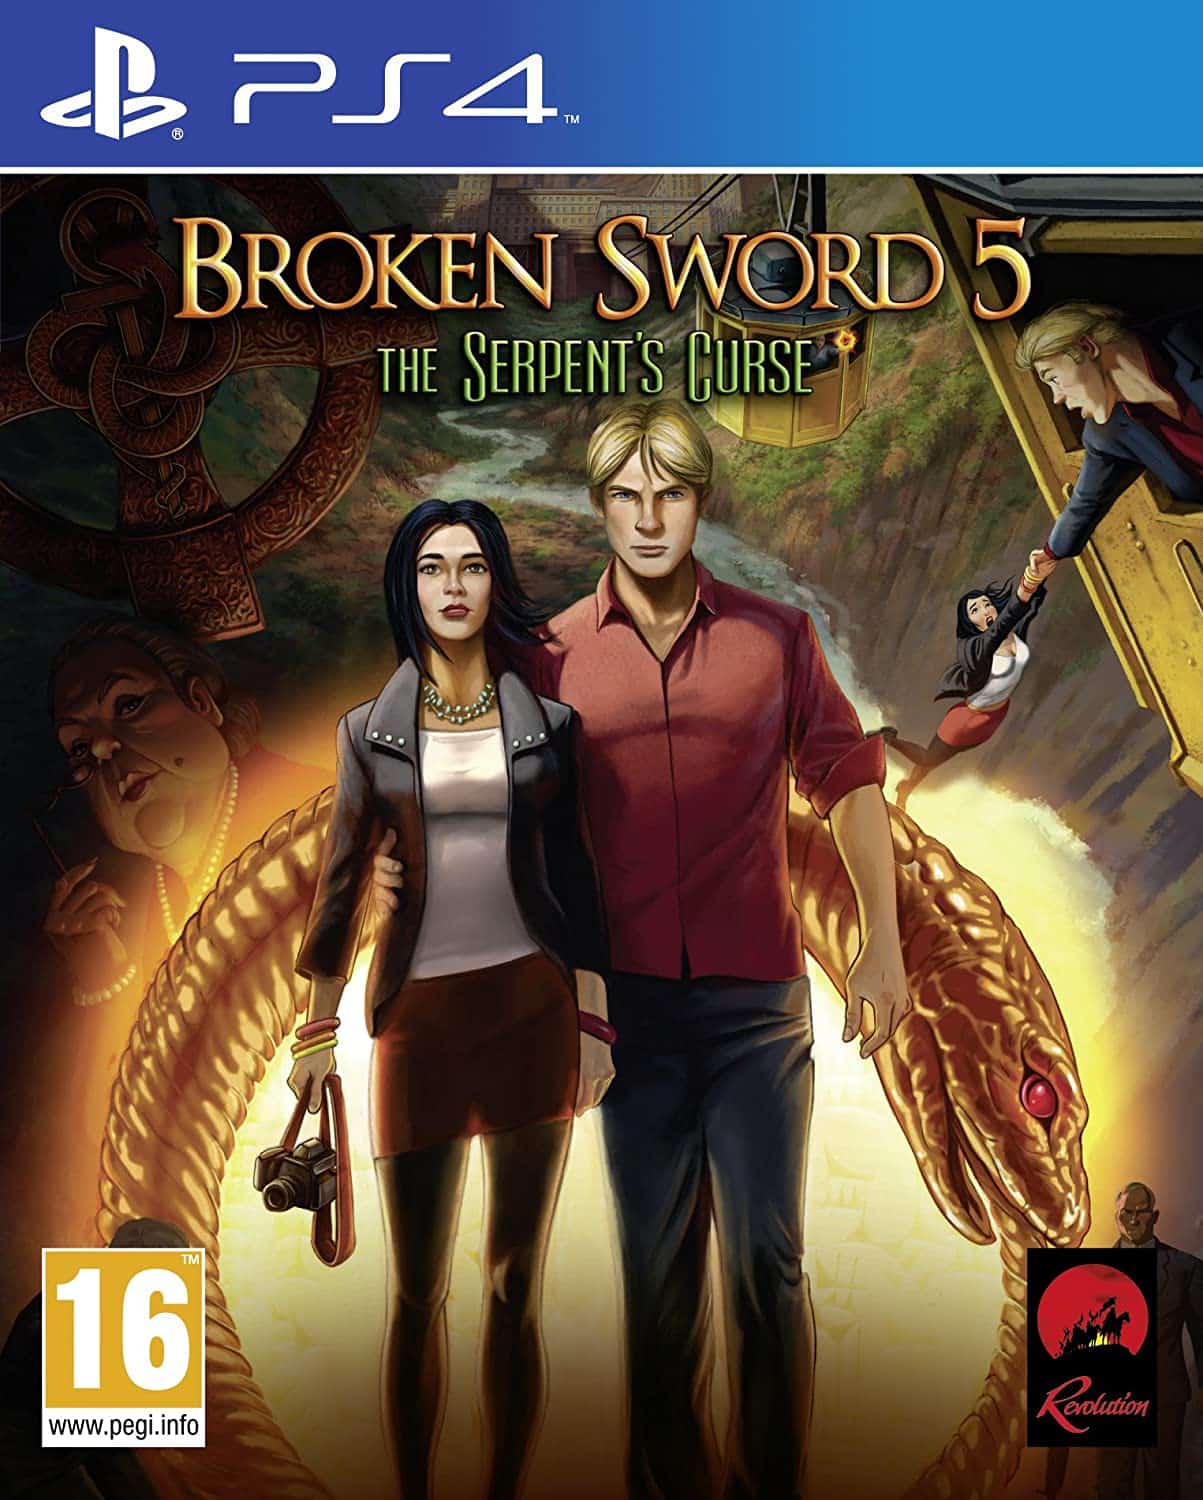 Broken Sword 5: the Serpent’s Curse player count stats